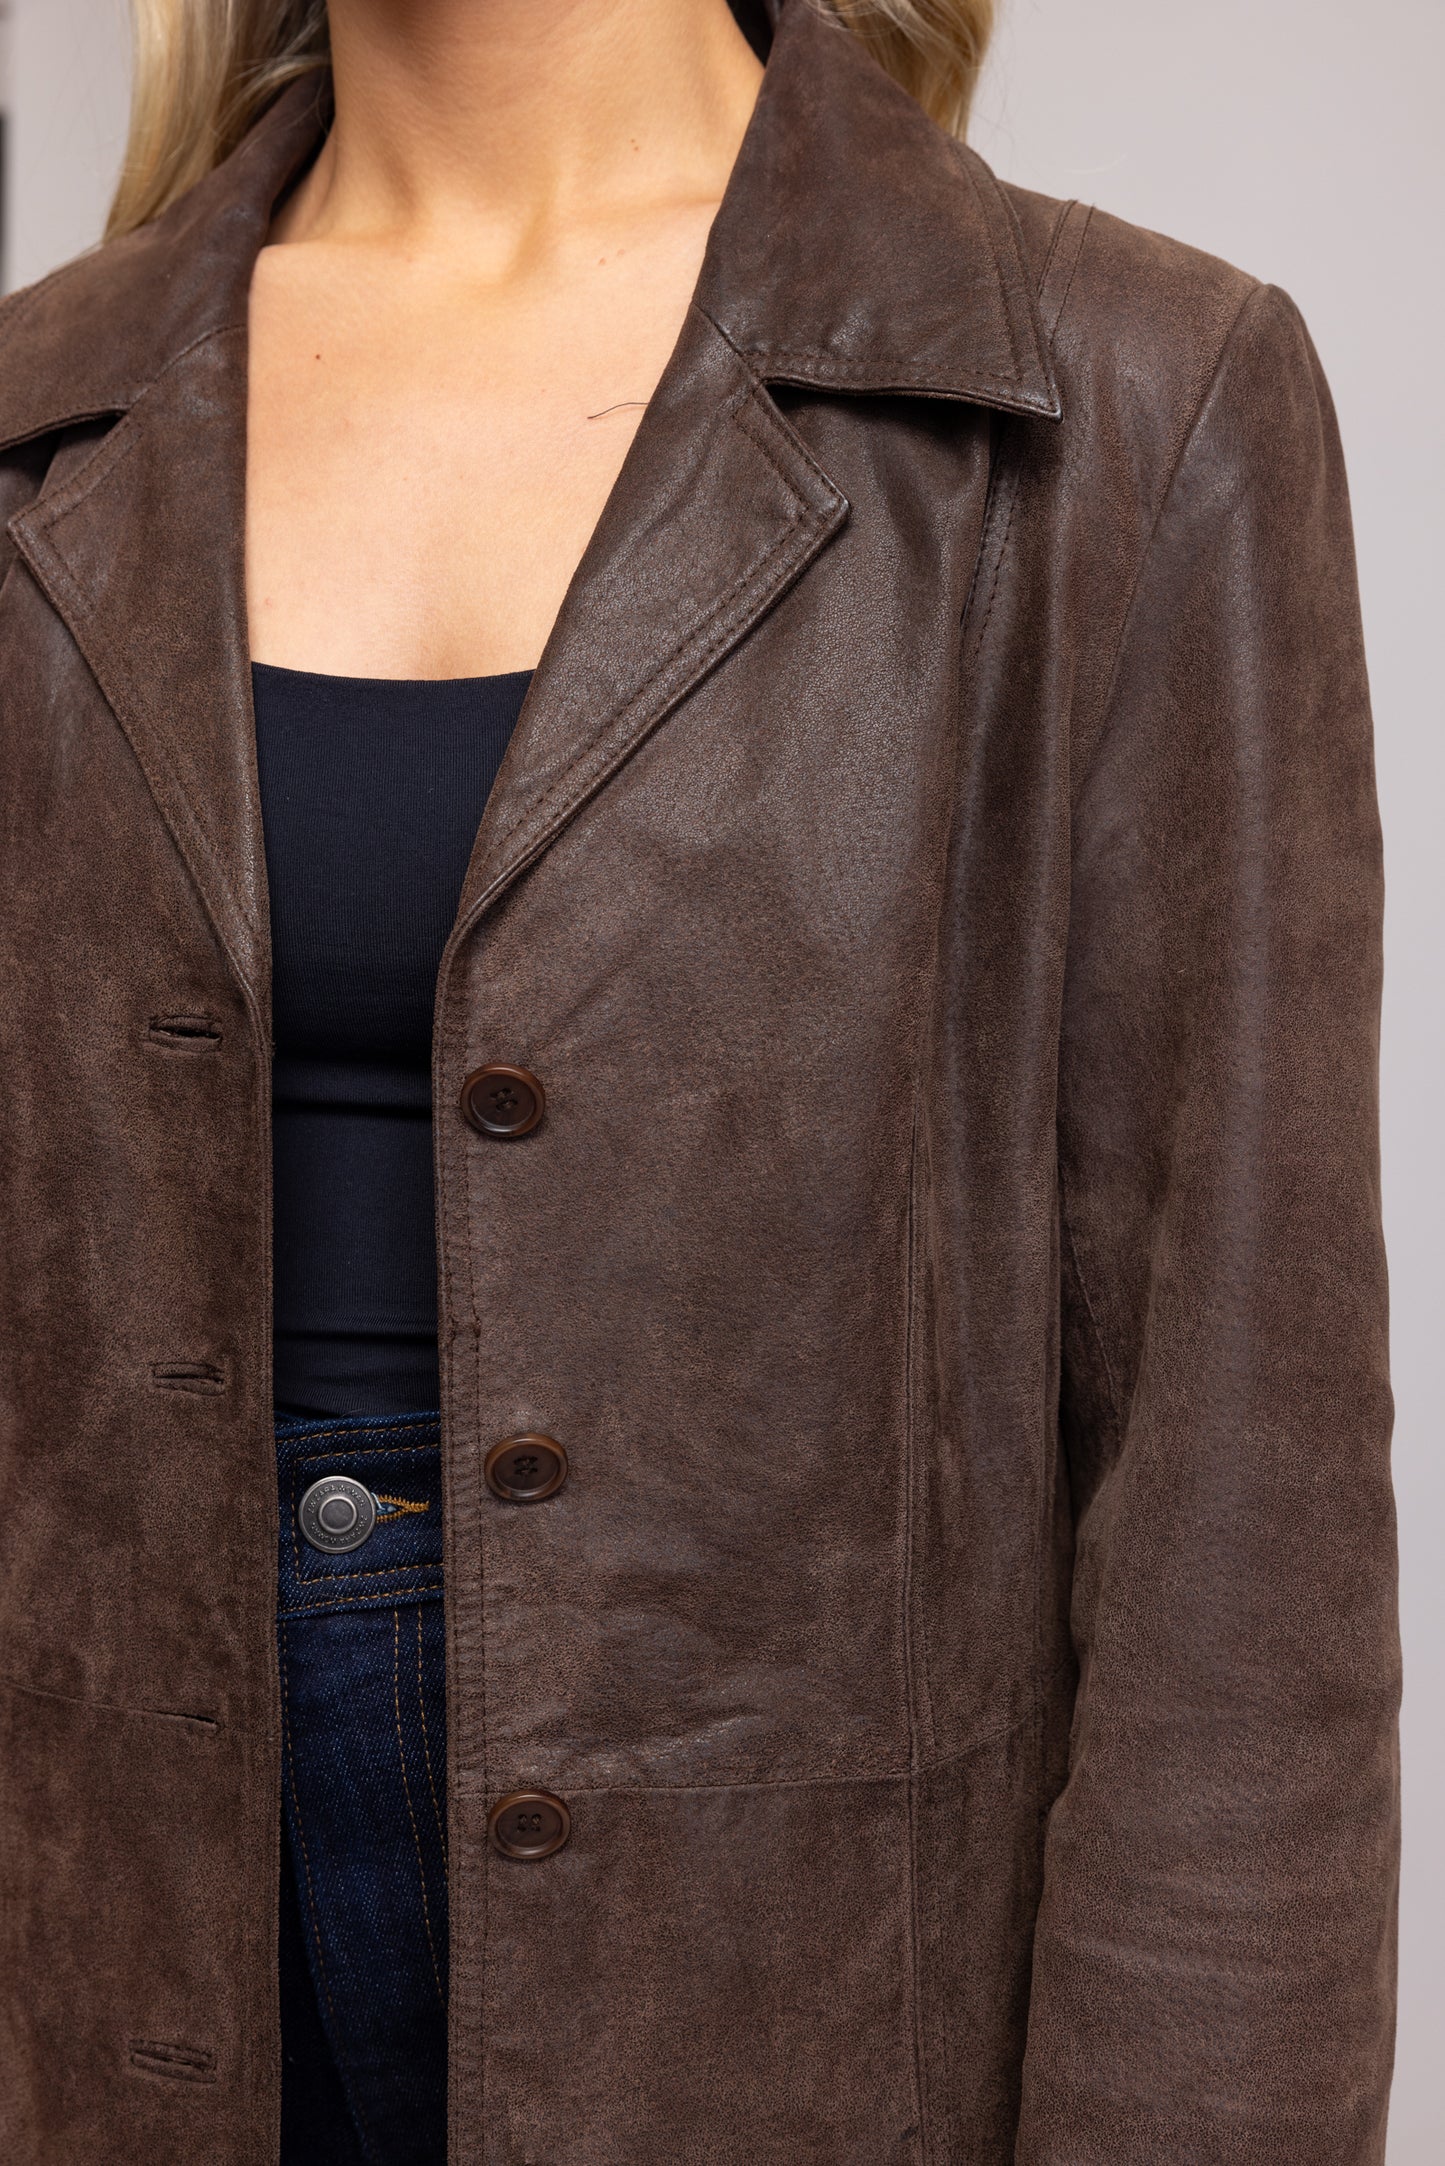 70's Brown Leather Midi Jacket M